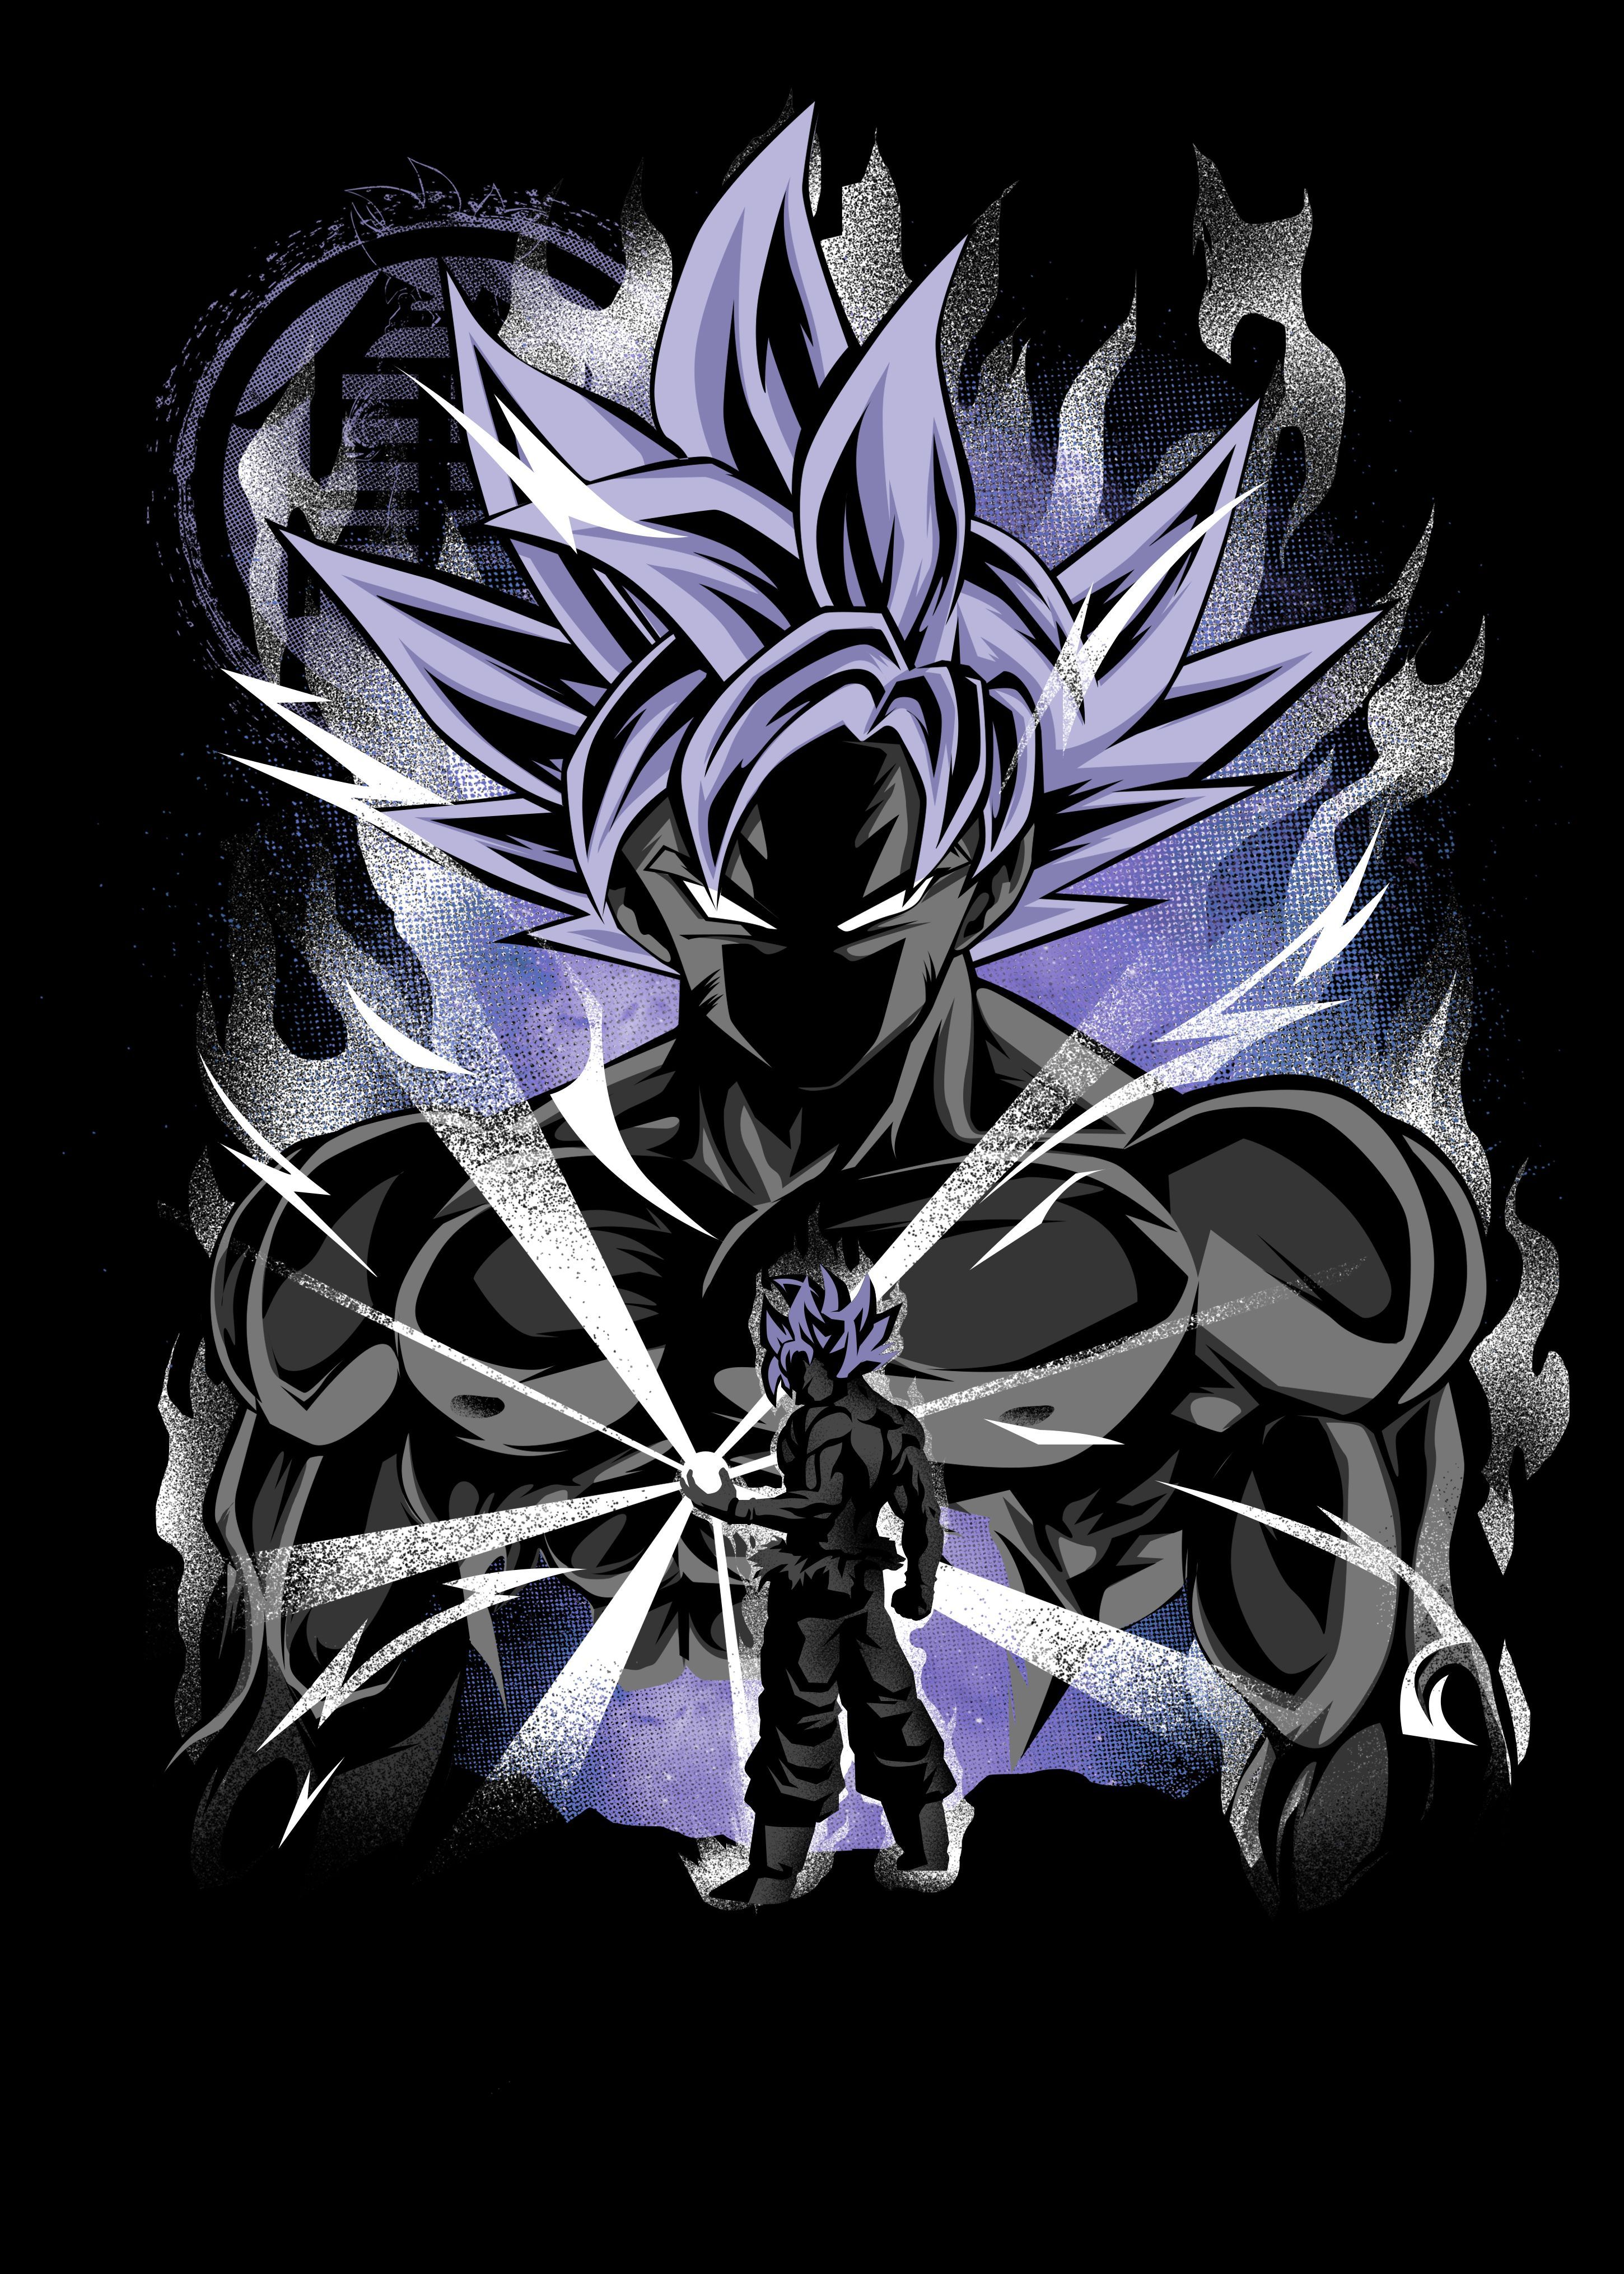 Ultra Instinct Power Of Goku #goku #ultrainstinct #dragonballz